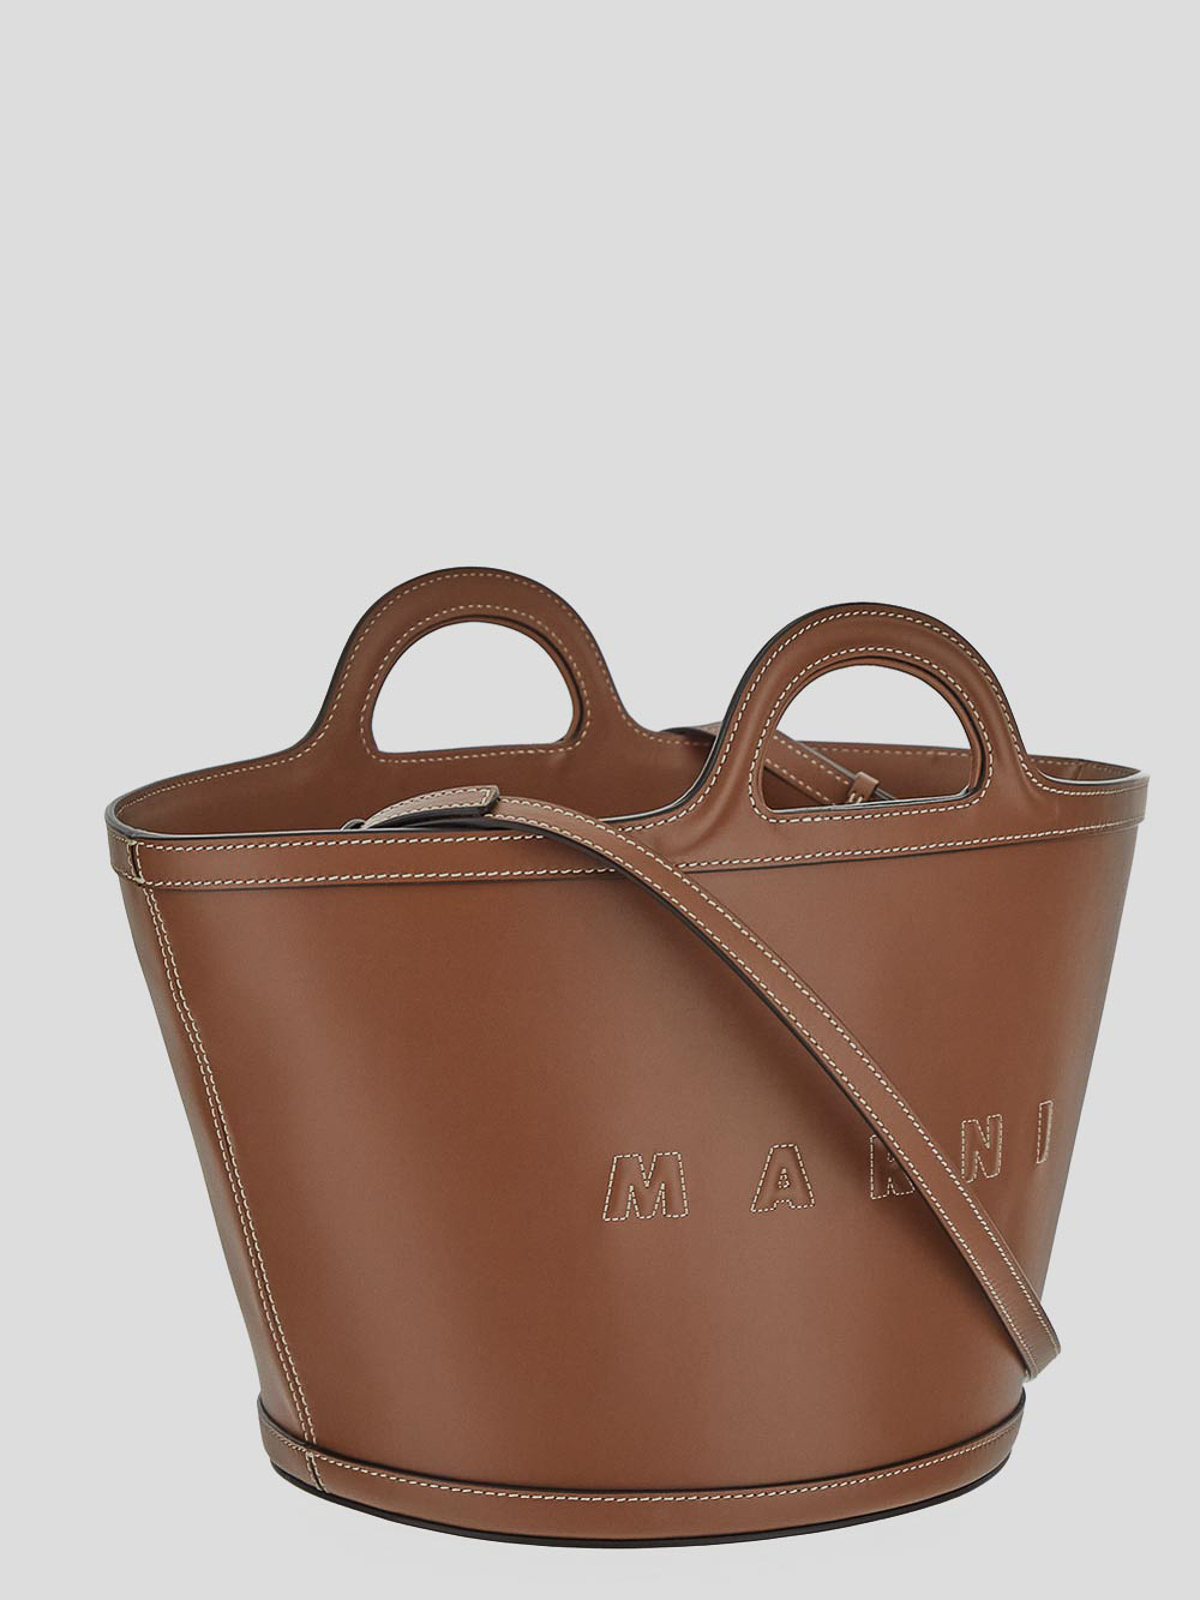 bucket bag price